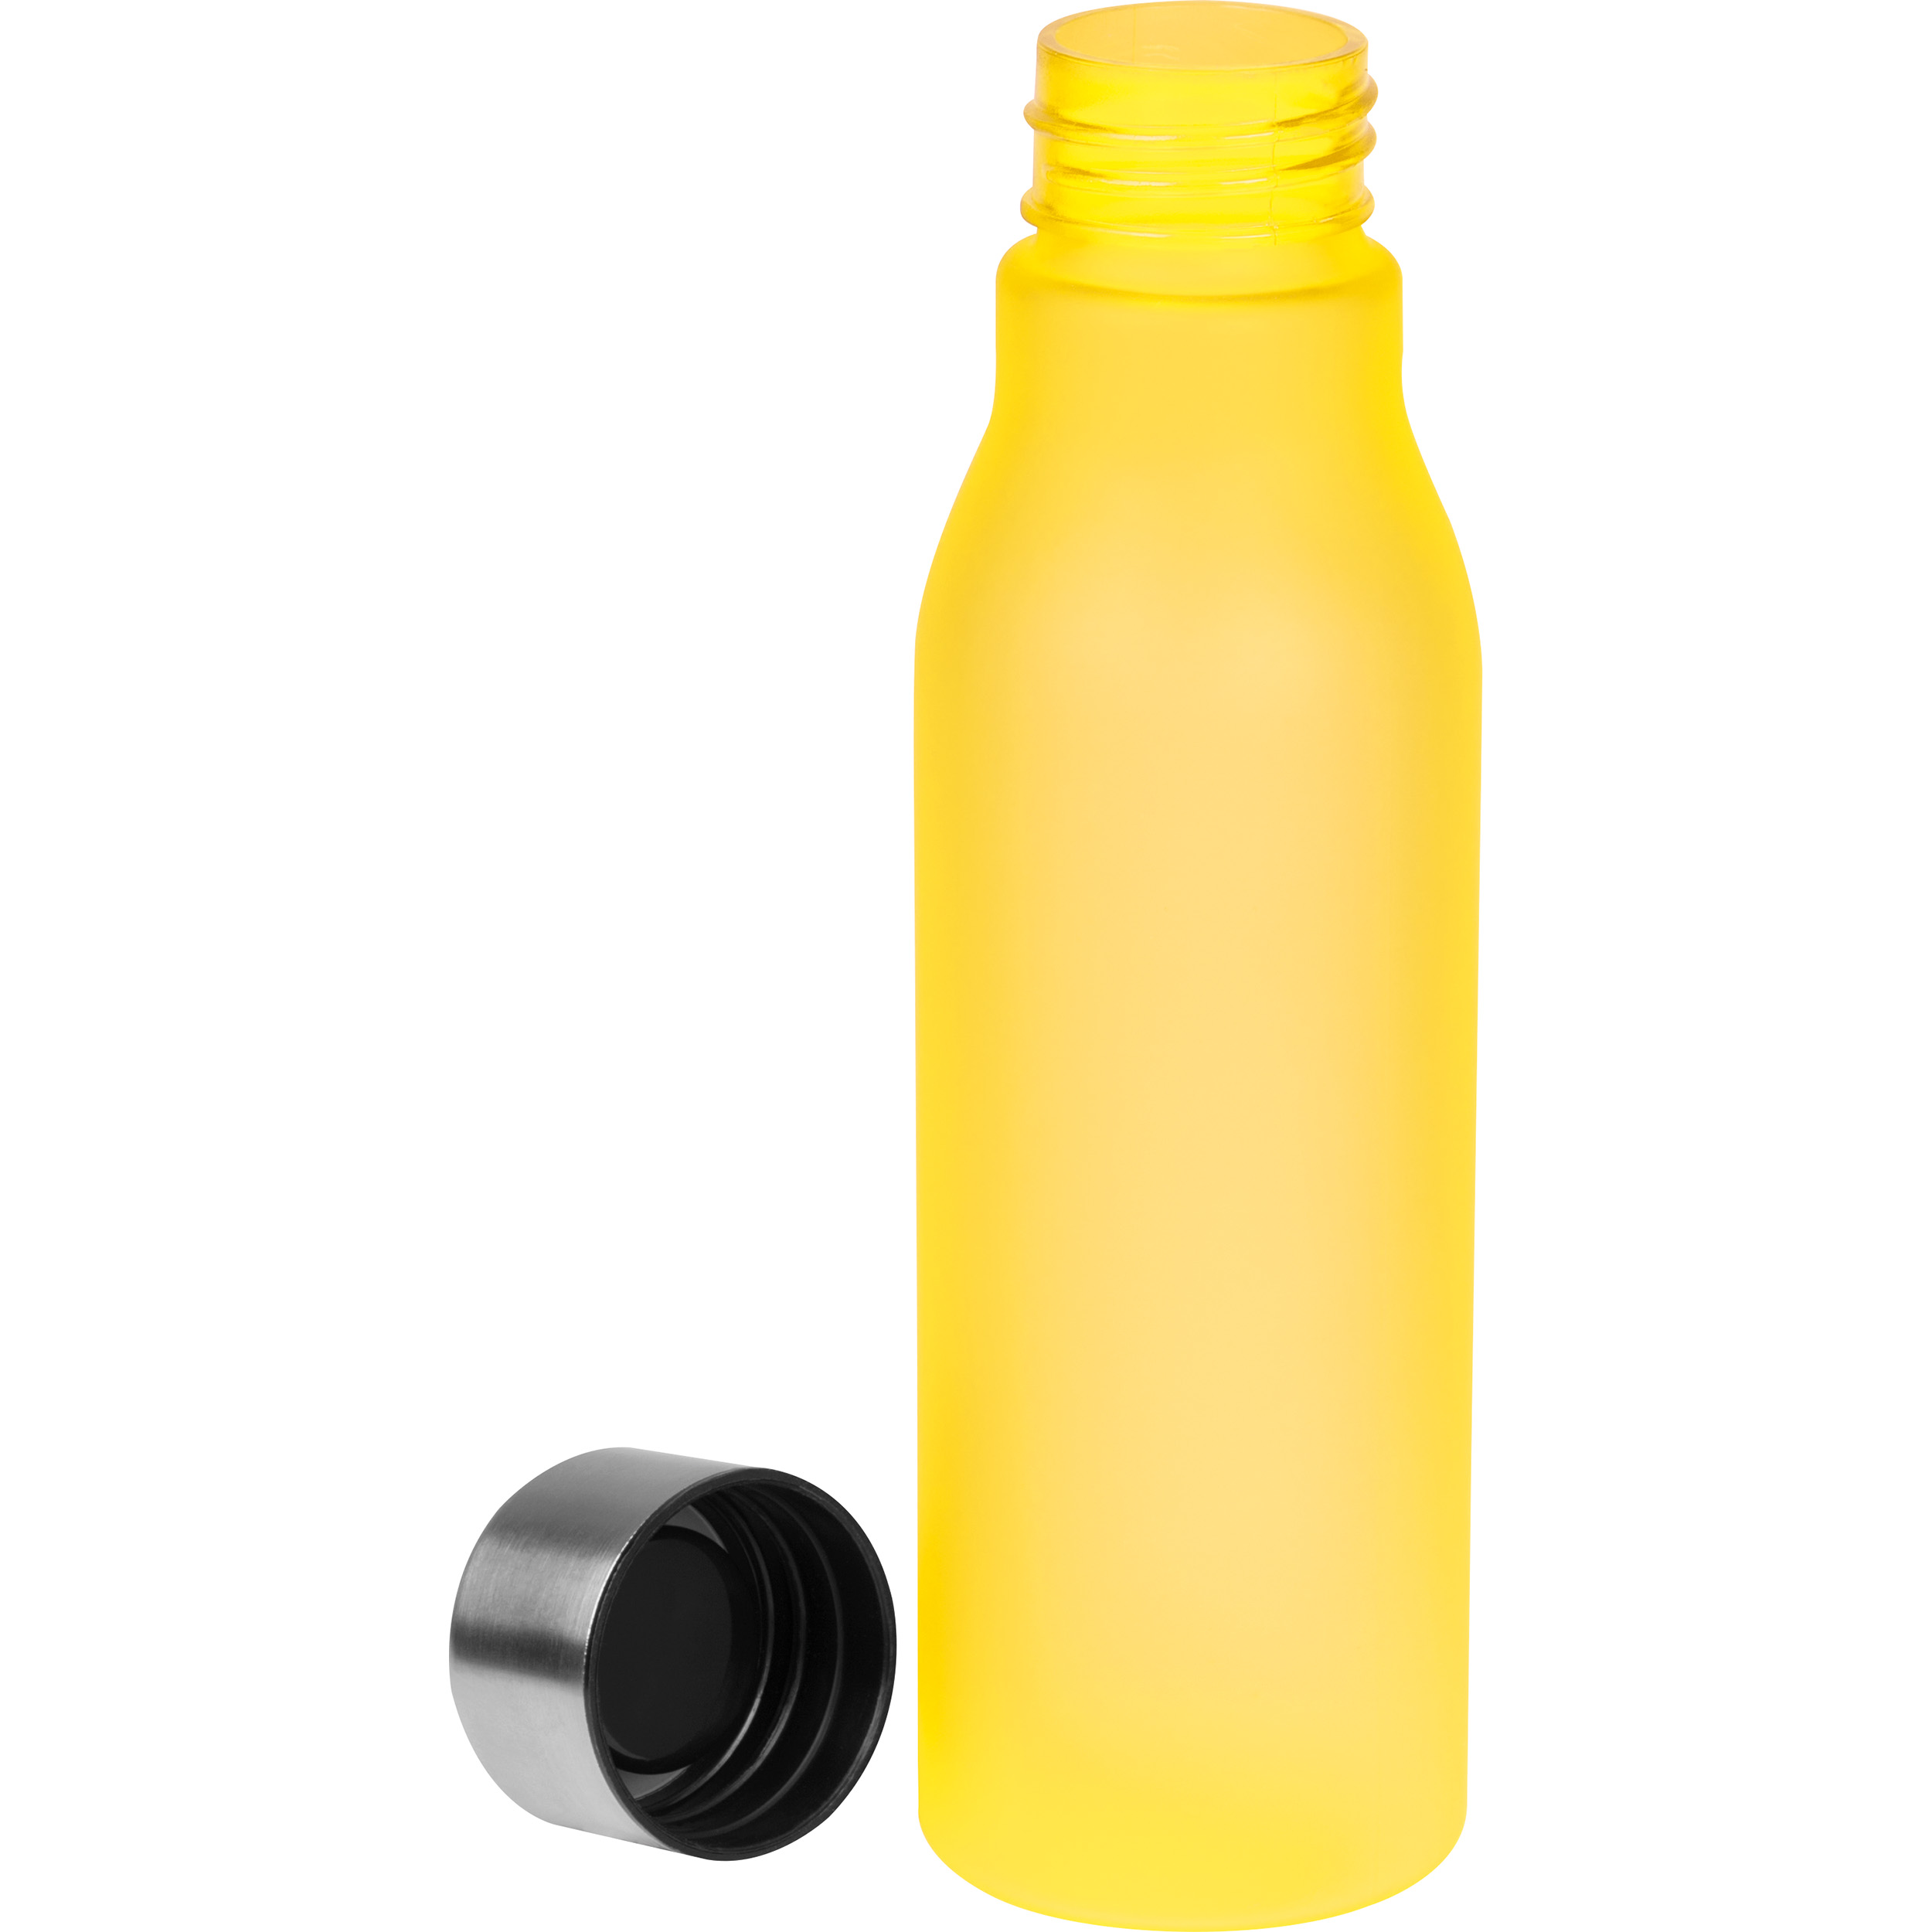 Желтая бутылочка. Желтая бутылка. Напитки в бутылках. Желтая пластиковая бутылка. Бутылка для воды желтая пластиковая.